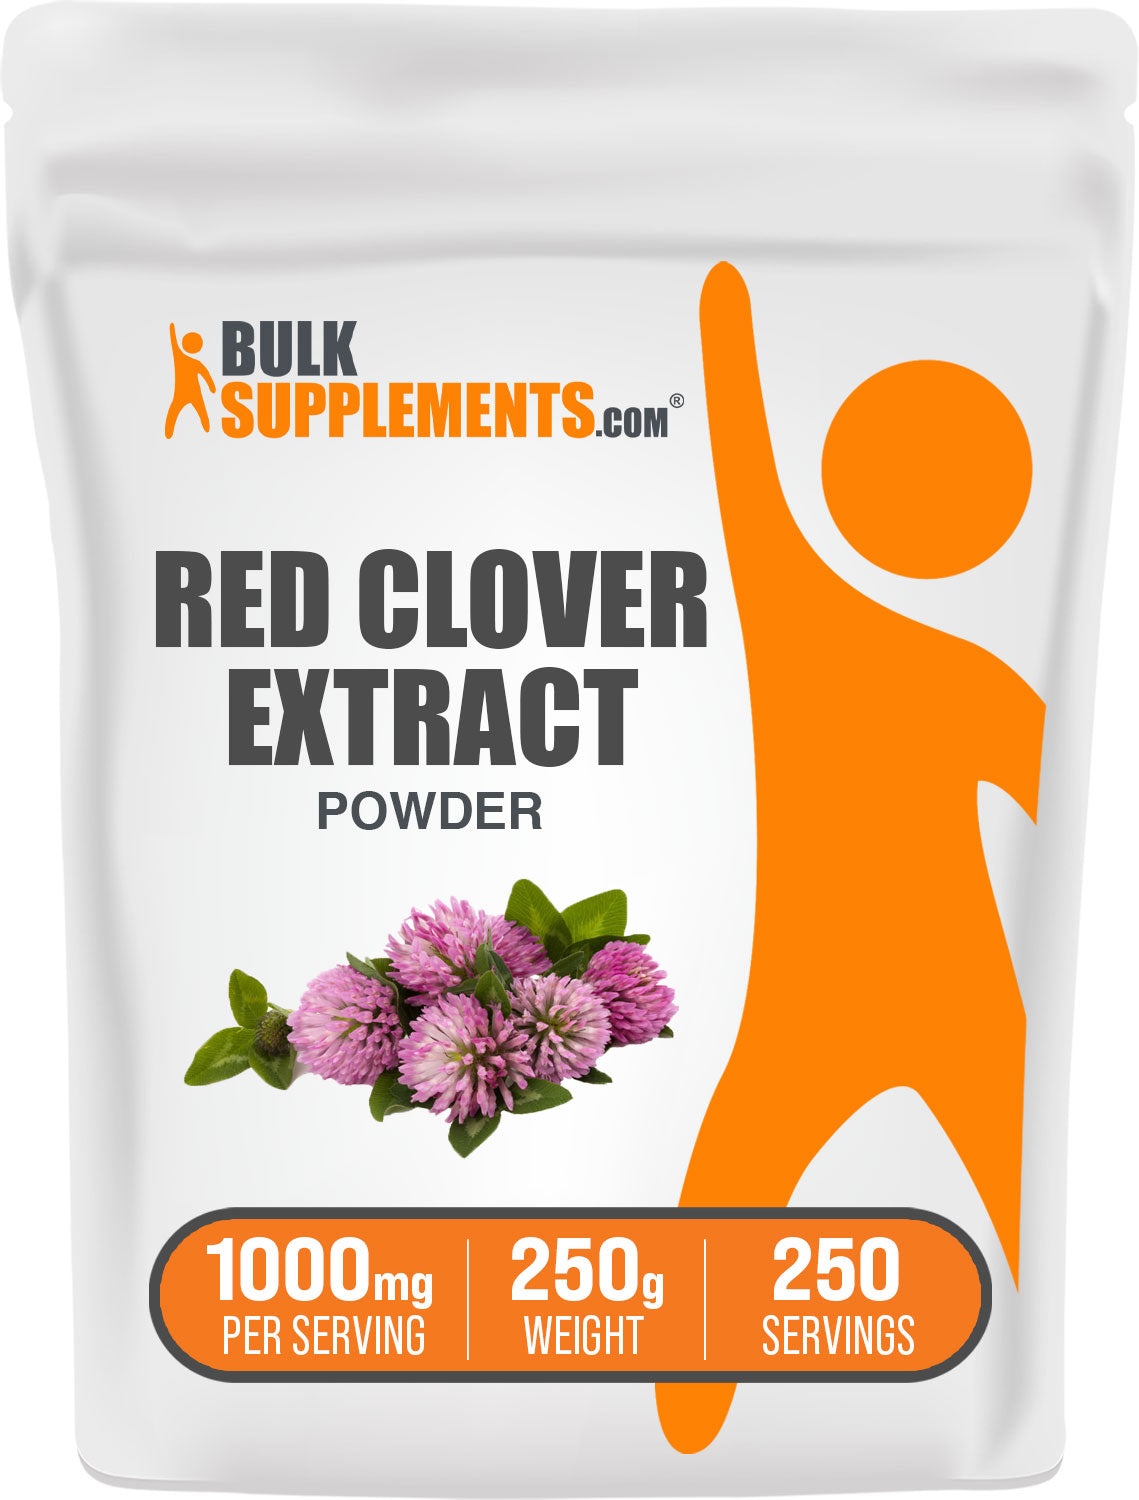 BulkSupplements.com Red Clover Extract Powder 250g Bag